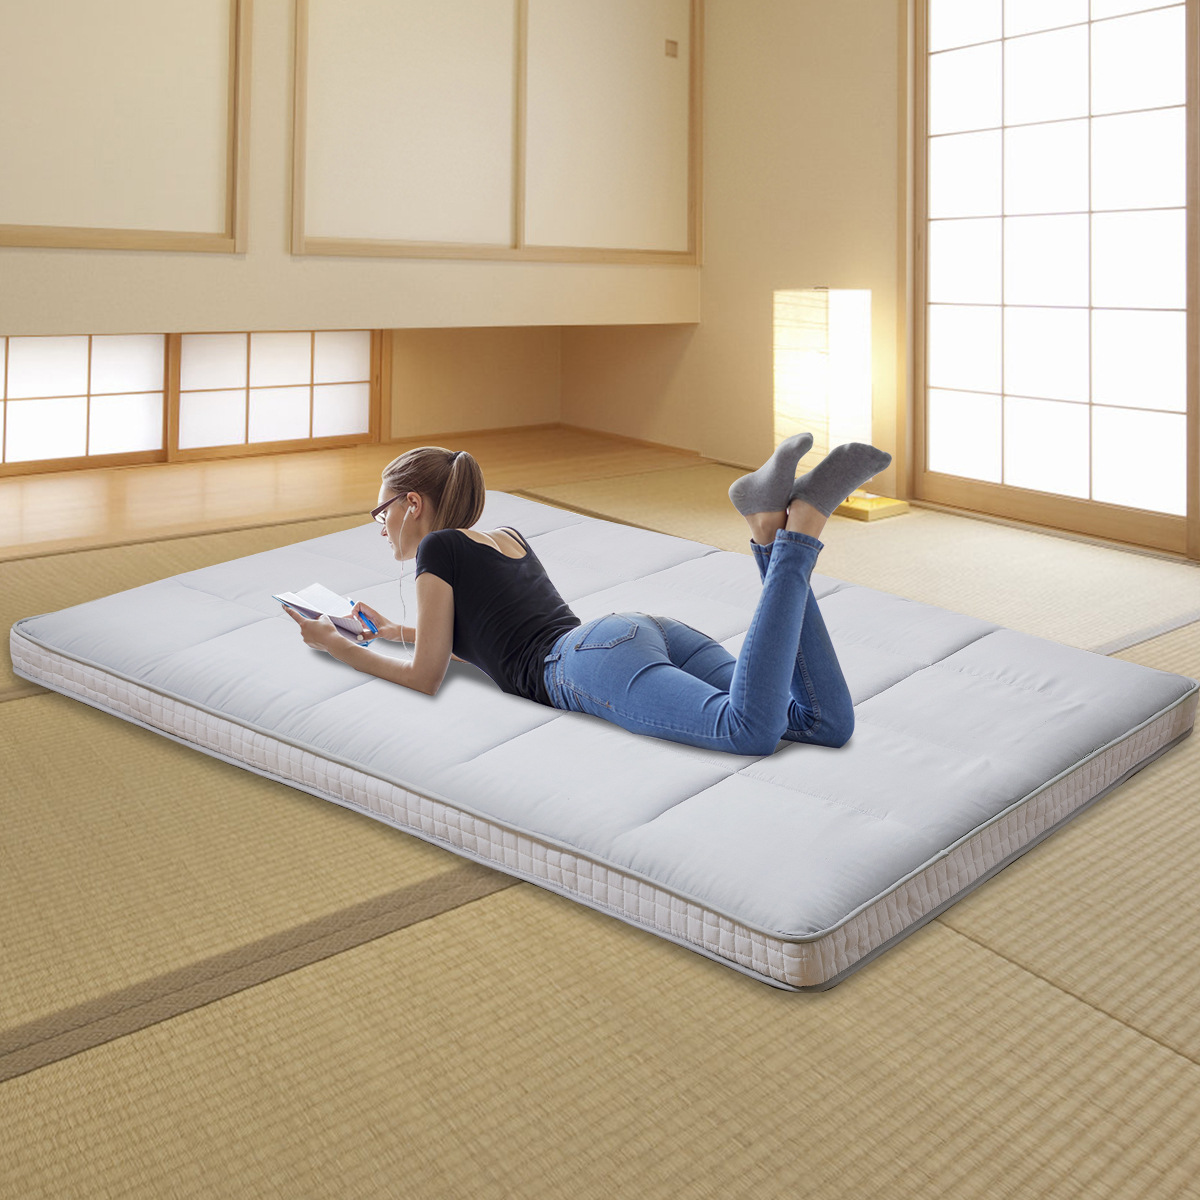 Slsy Japanese Floor Mattress Futon Mattress Thicken Sleeping Pad Foldable Roll Up Mattress Kids Floor Lounger Bed Couches Sofas